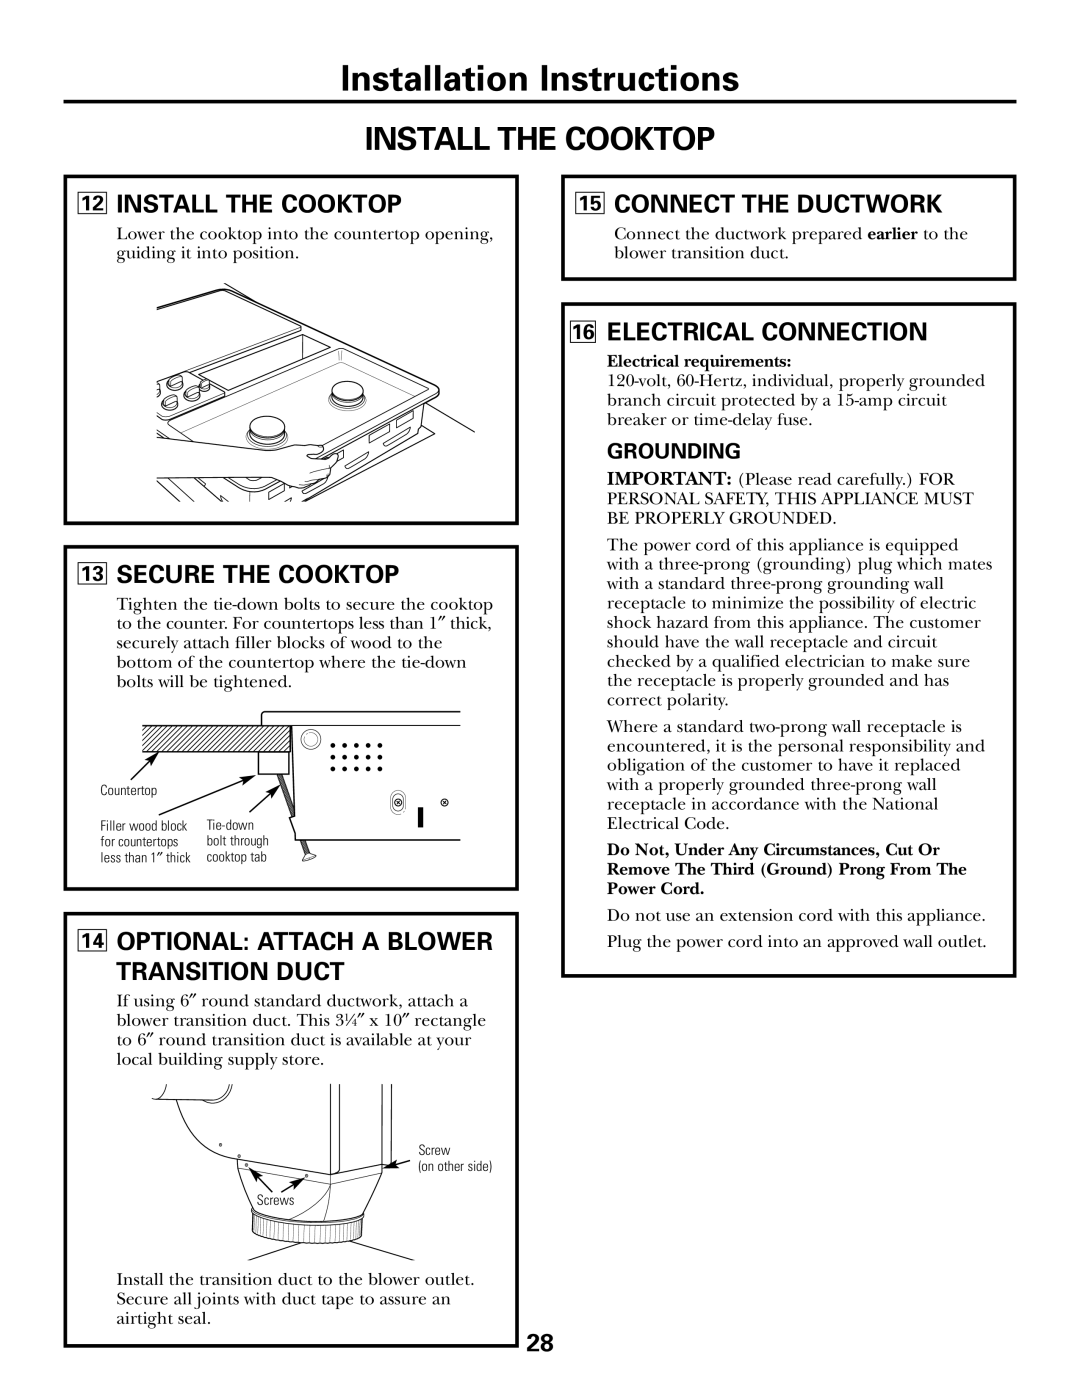 GE JGP990 manual Installation Instructions, Install The Cooktop, 12INSTALL THE COOKTOP, 13SECURE THE COOKTOP, Grounding 